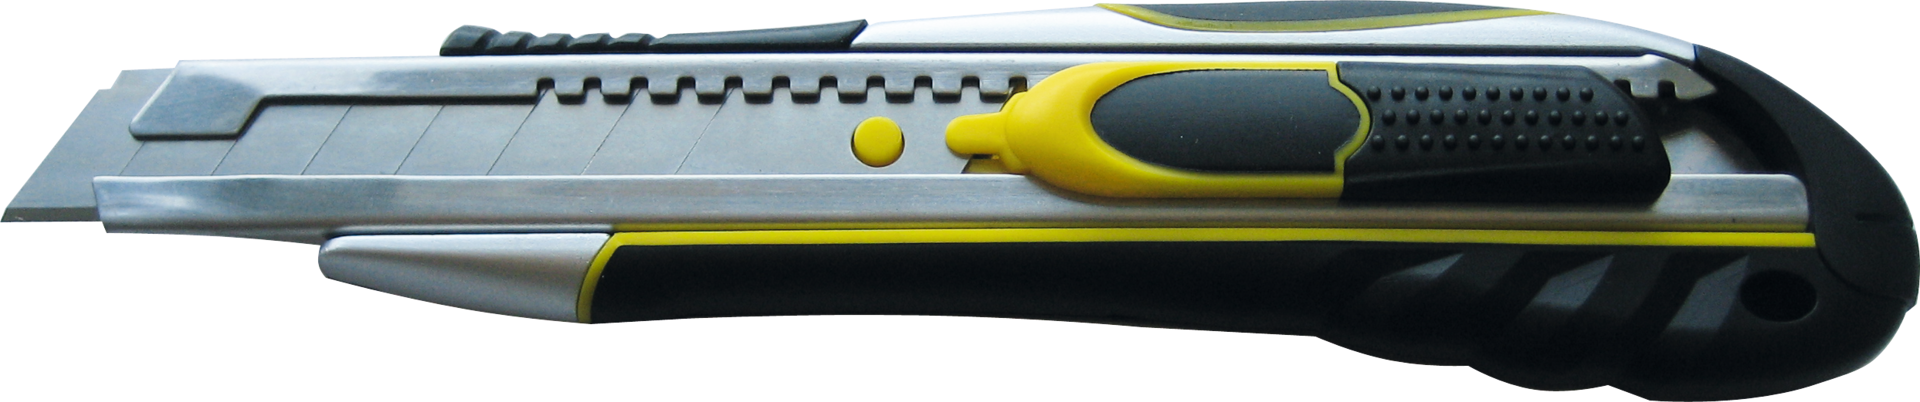 Sicherheitscuttermesser Abbrechklinge 18mm inkl. 1 Klinge L195mm